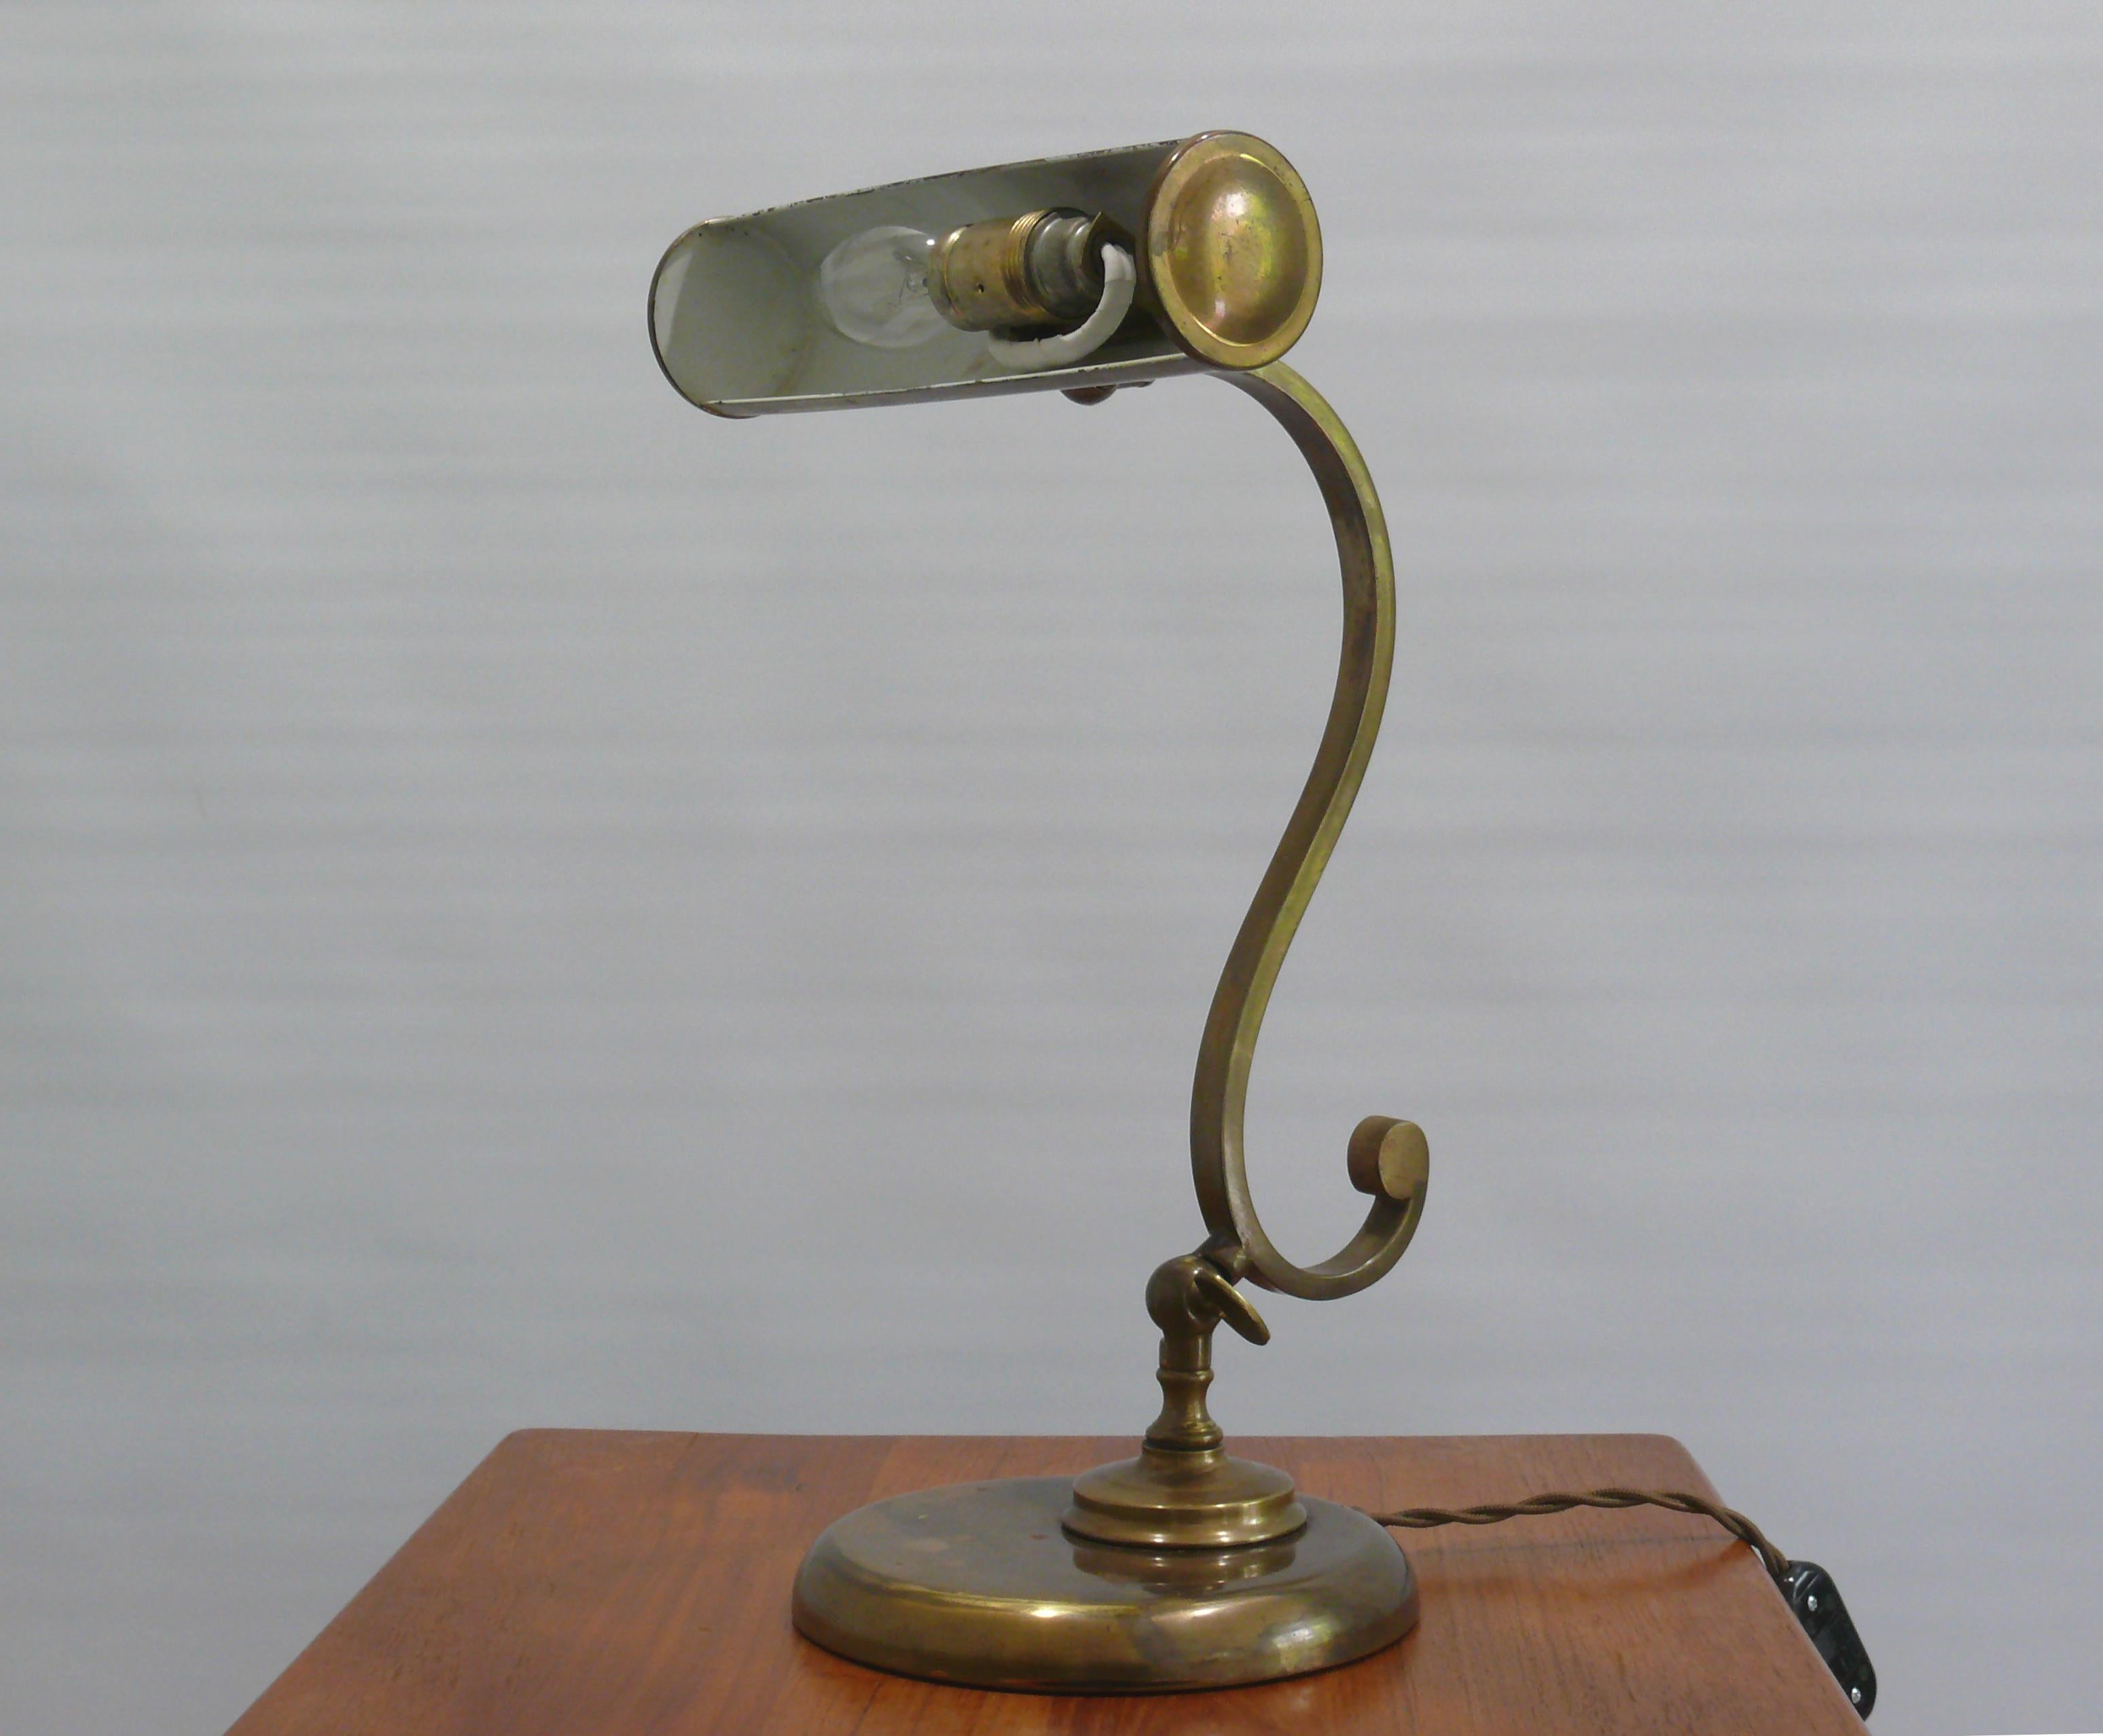 Midcentury Messing Klavierlampe, 1950er Jahre (Art nouveau) im Angebot